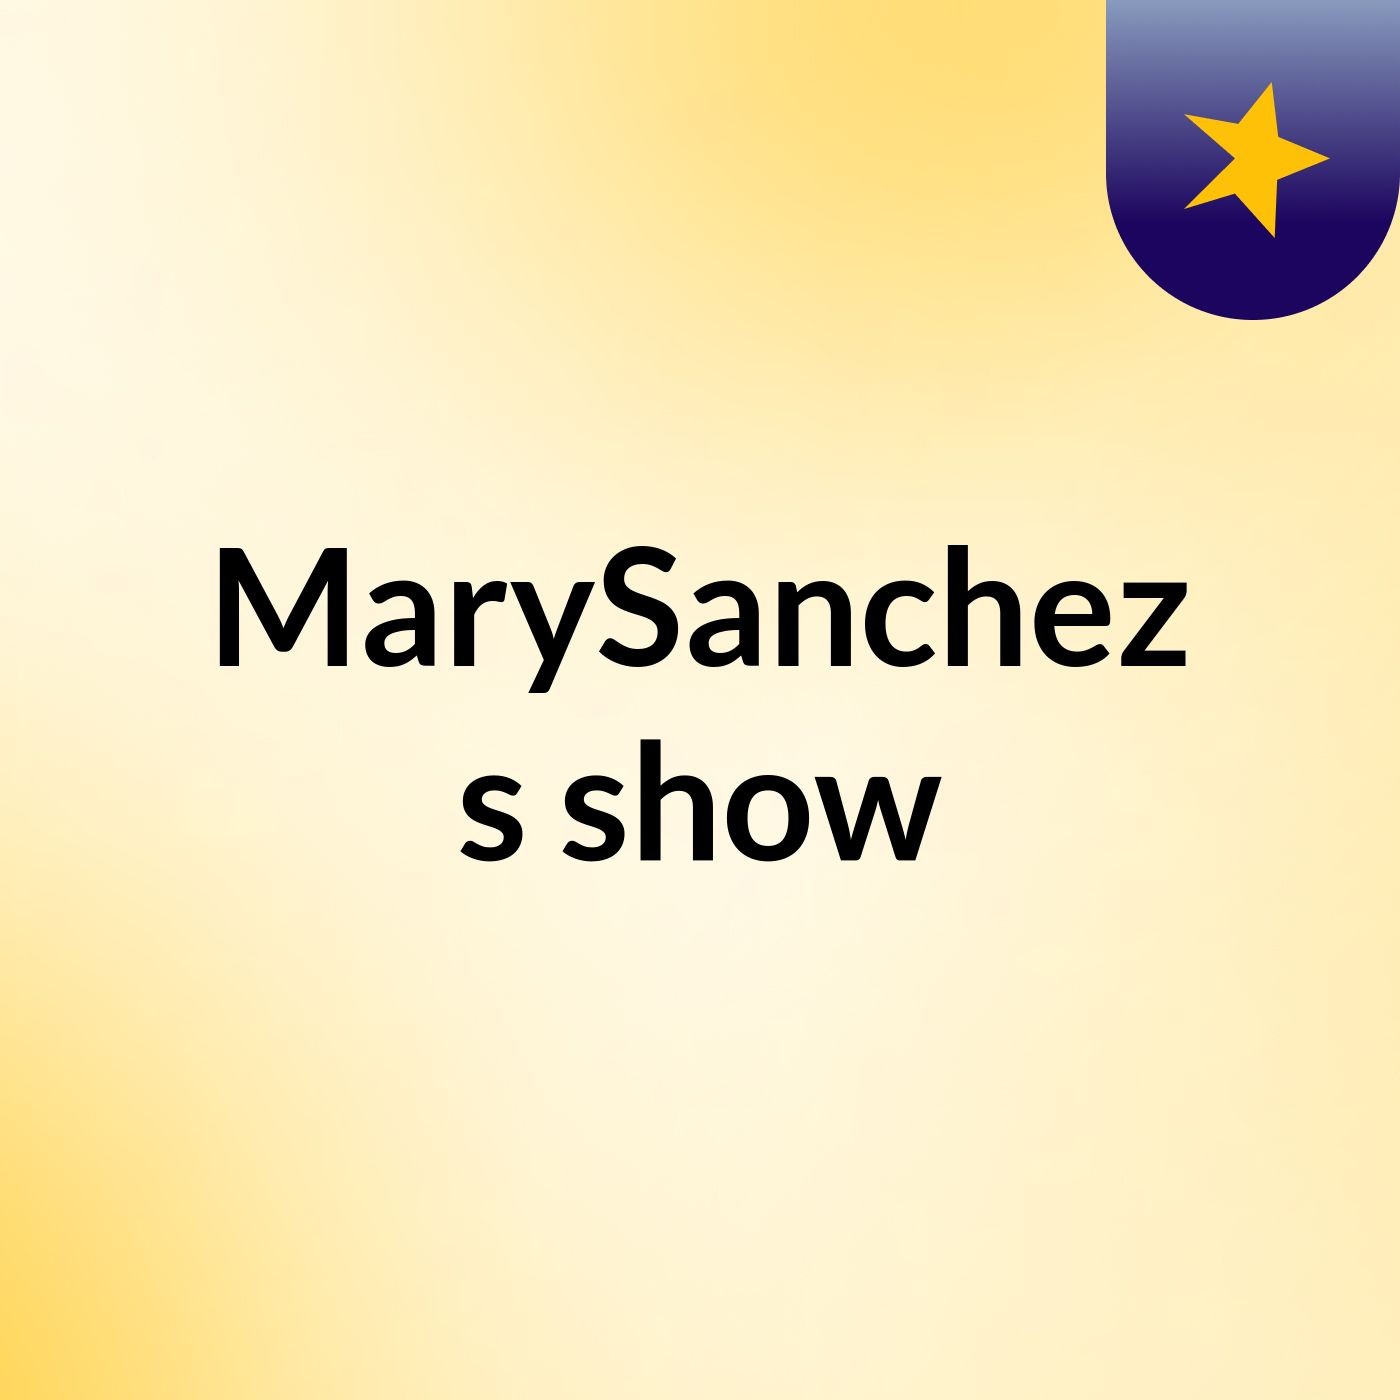 MarySanchez's show